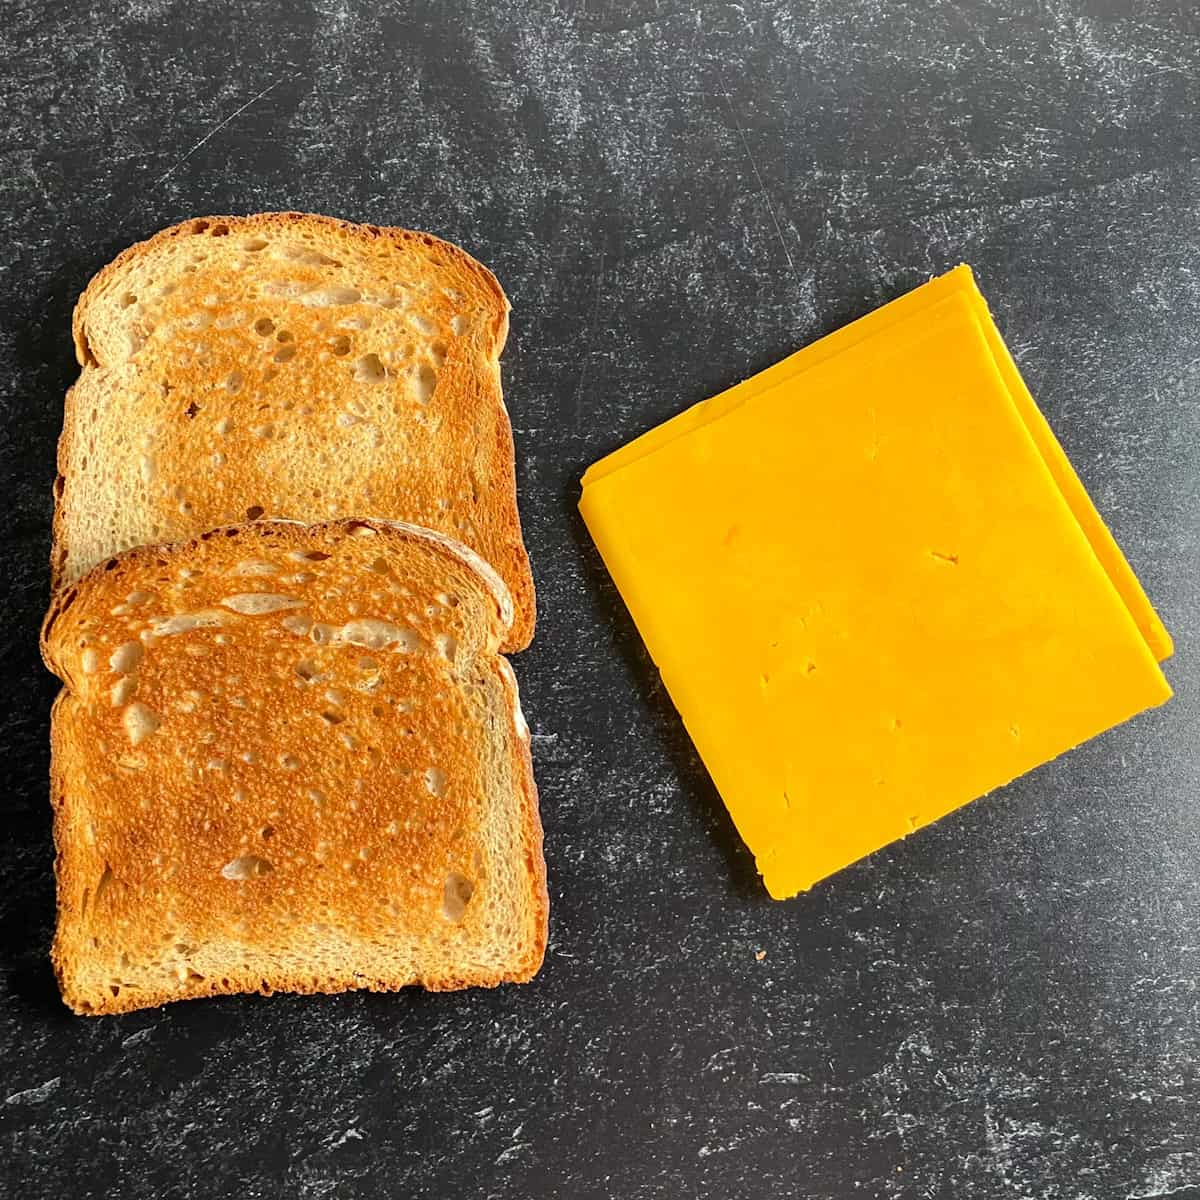 microwave grilled cheese ingredients